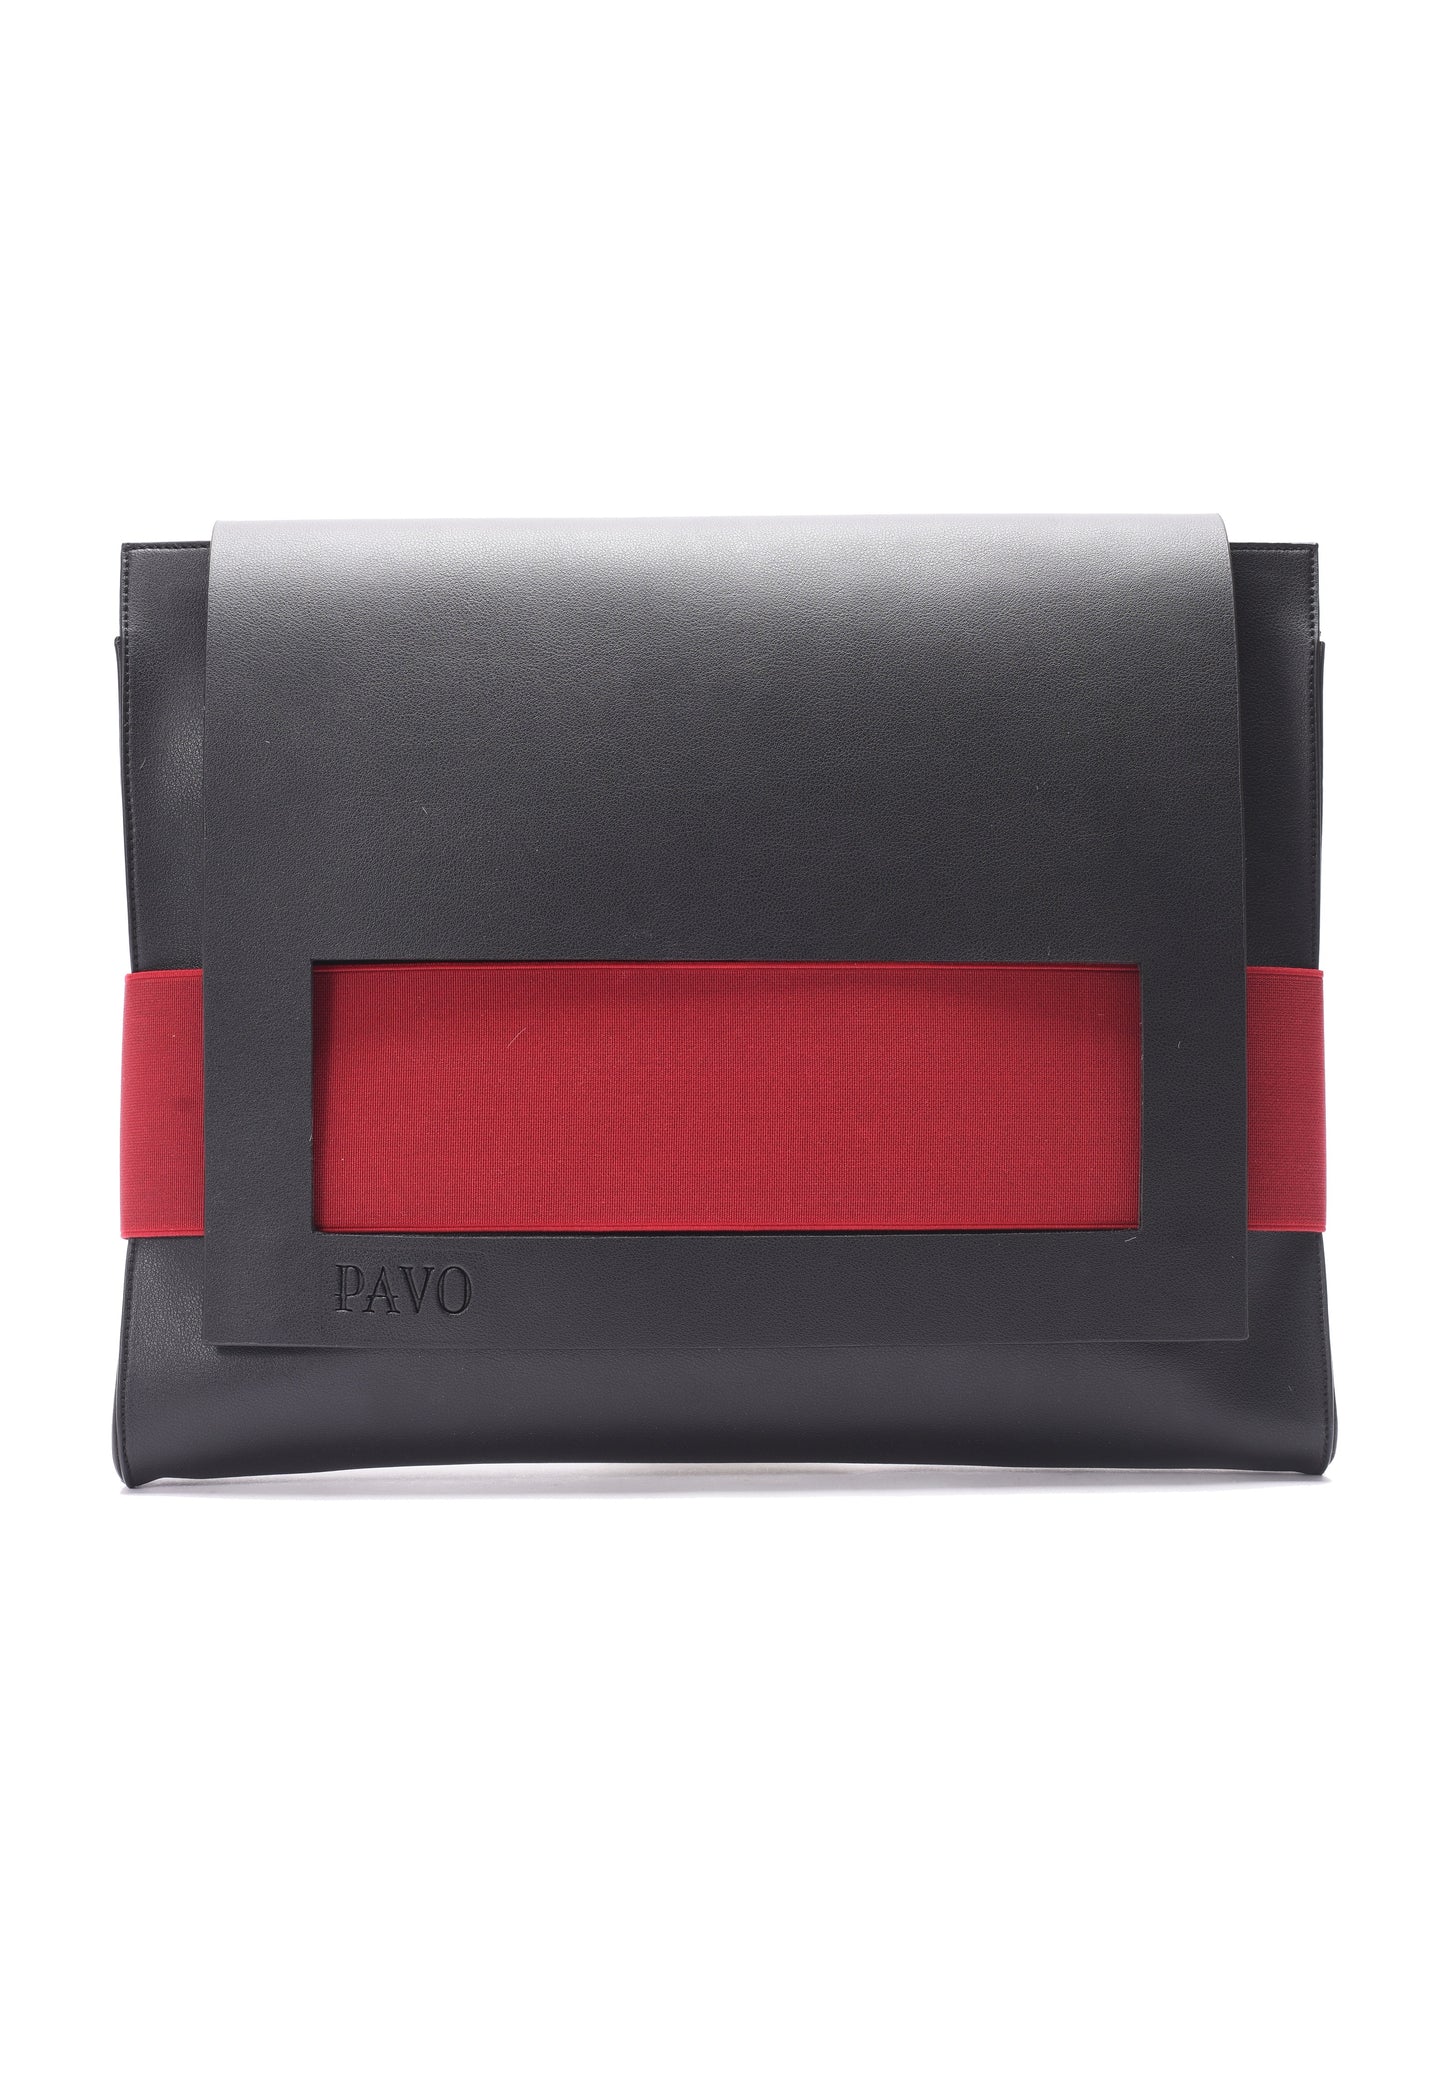 Black laptop sleeve/leather Classeur - Code 601